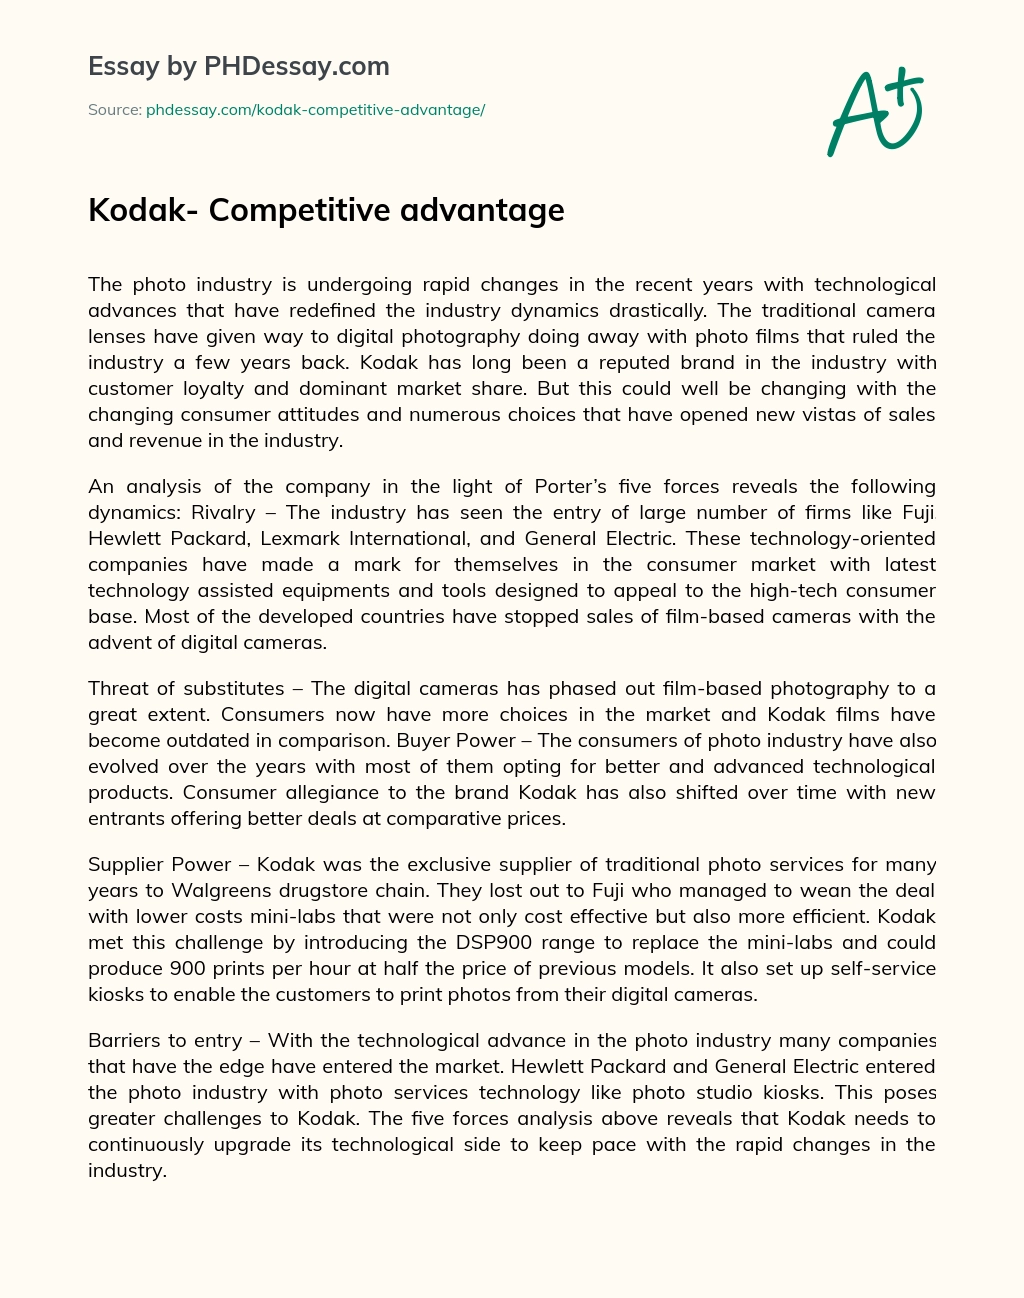 Kodak- Competitive advantage essay